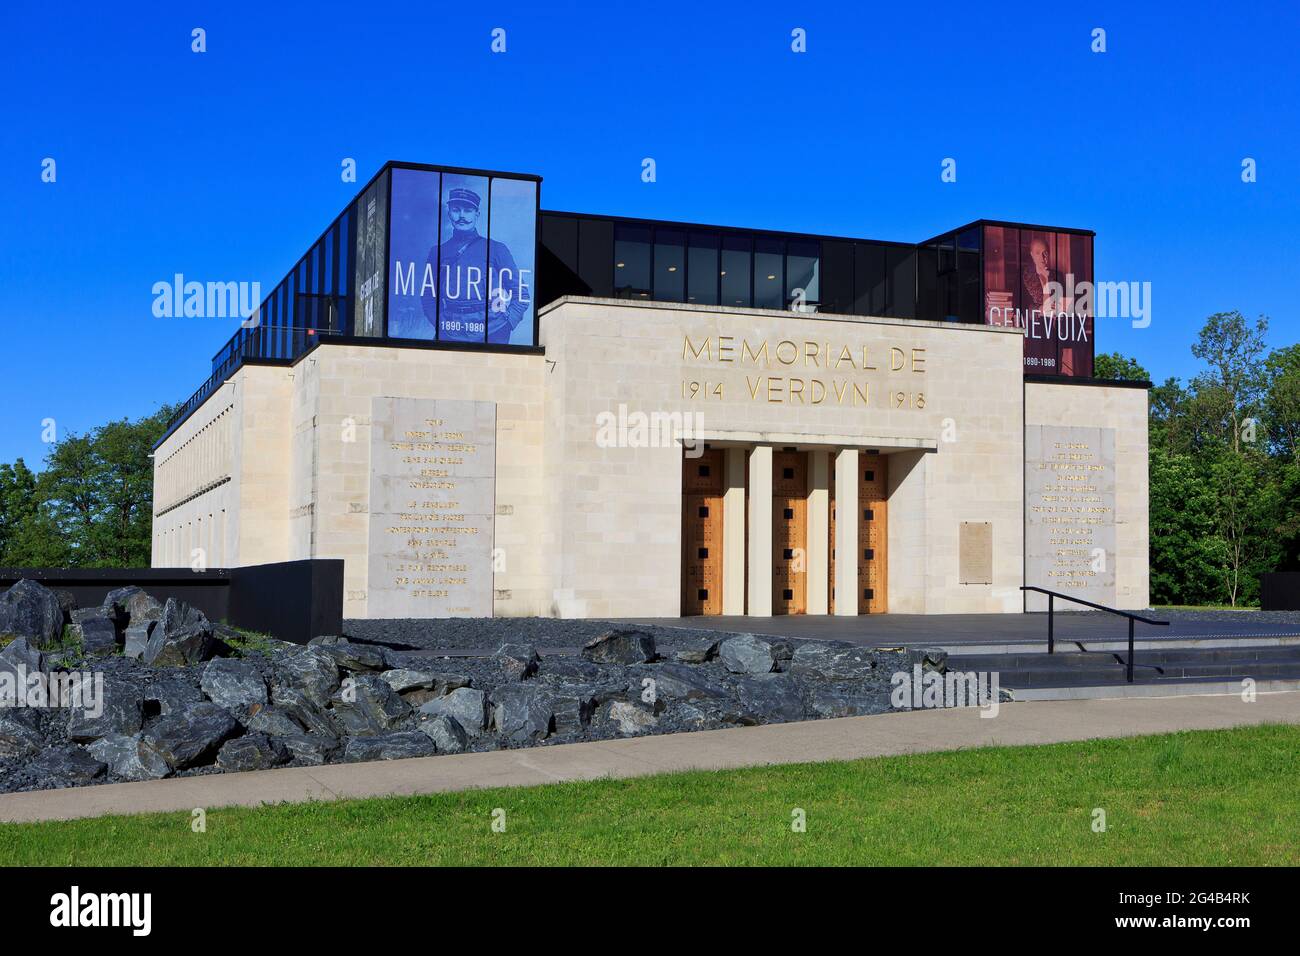 The First World War Verdun Memorial Museum in Fleury-devant-Douaumont (Meuse), France) Stock Photo